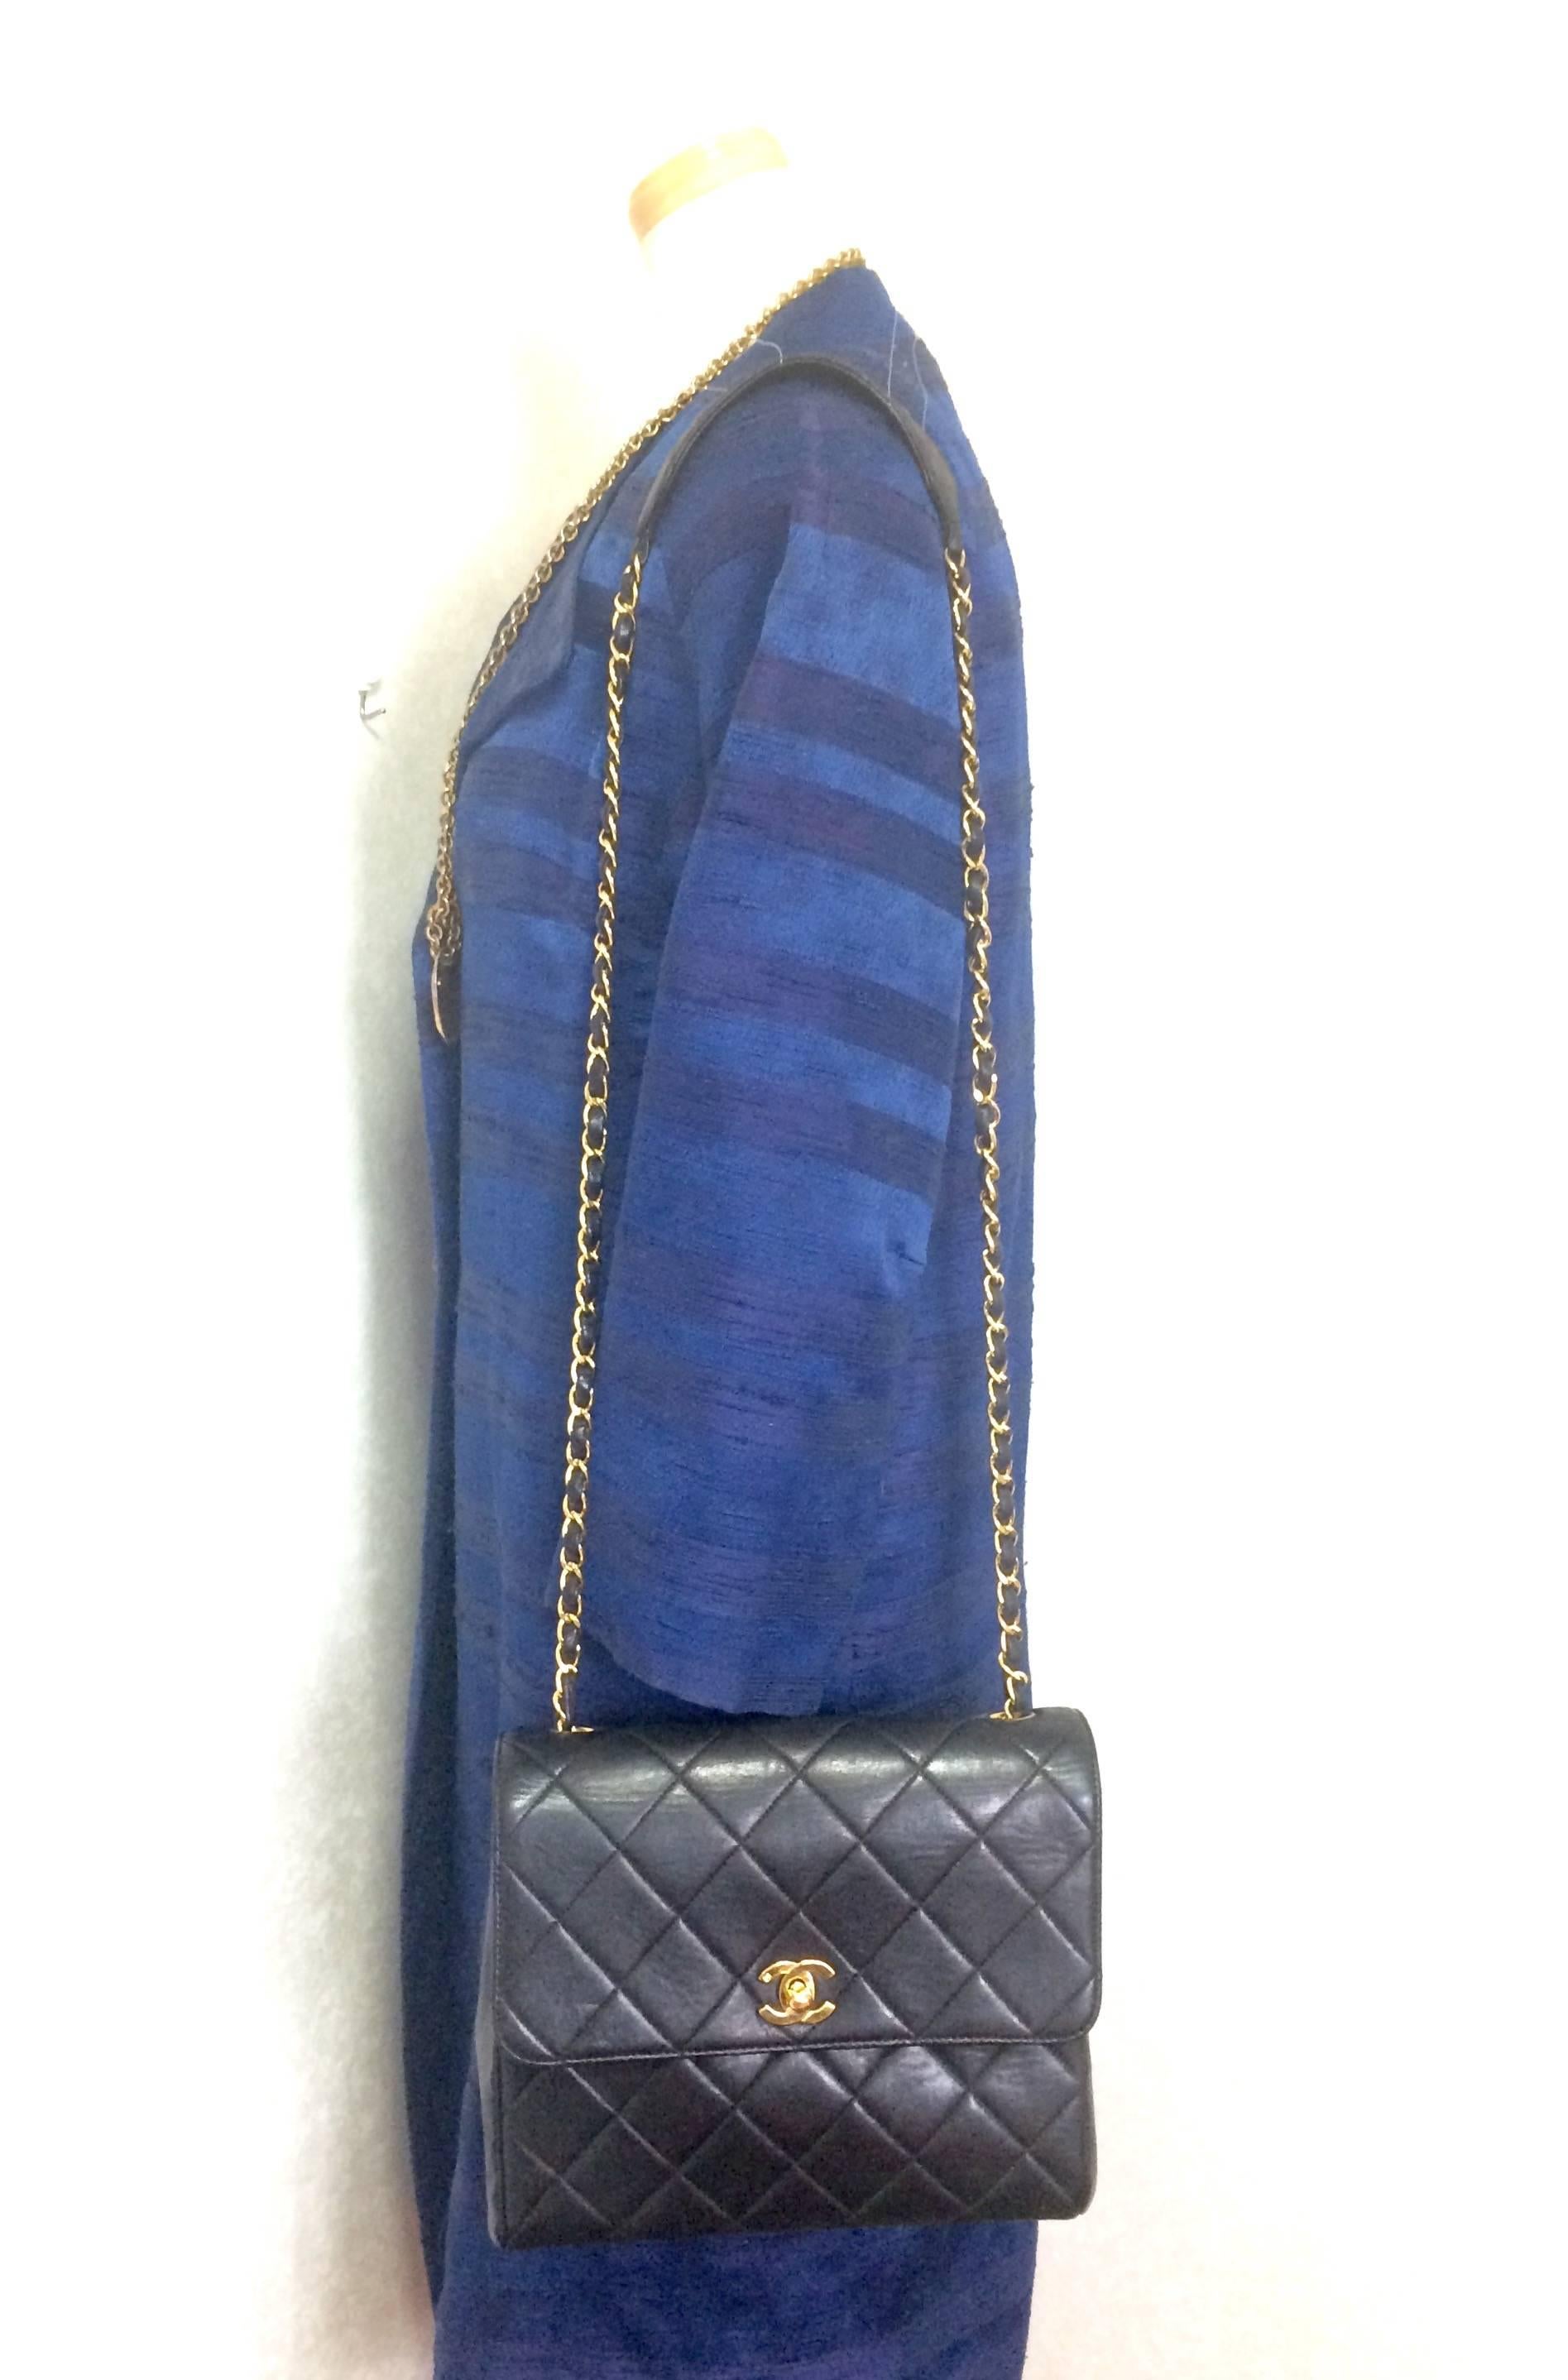 Vintage CHANEL black lamb leather 2.55 classic square shape shoulder bag with cc 3